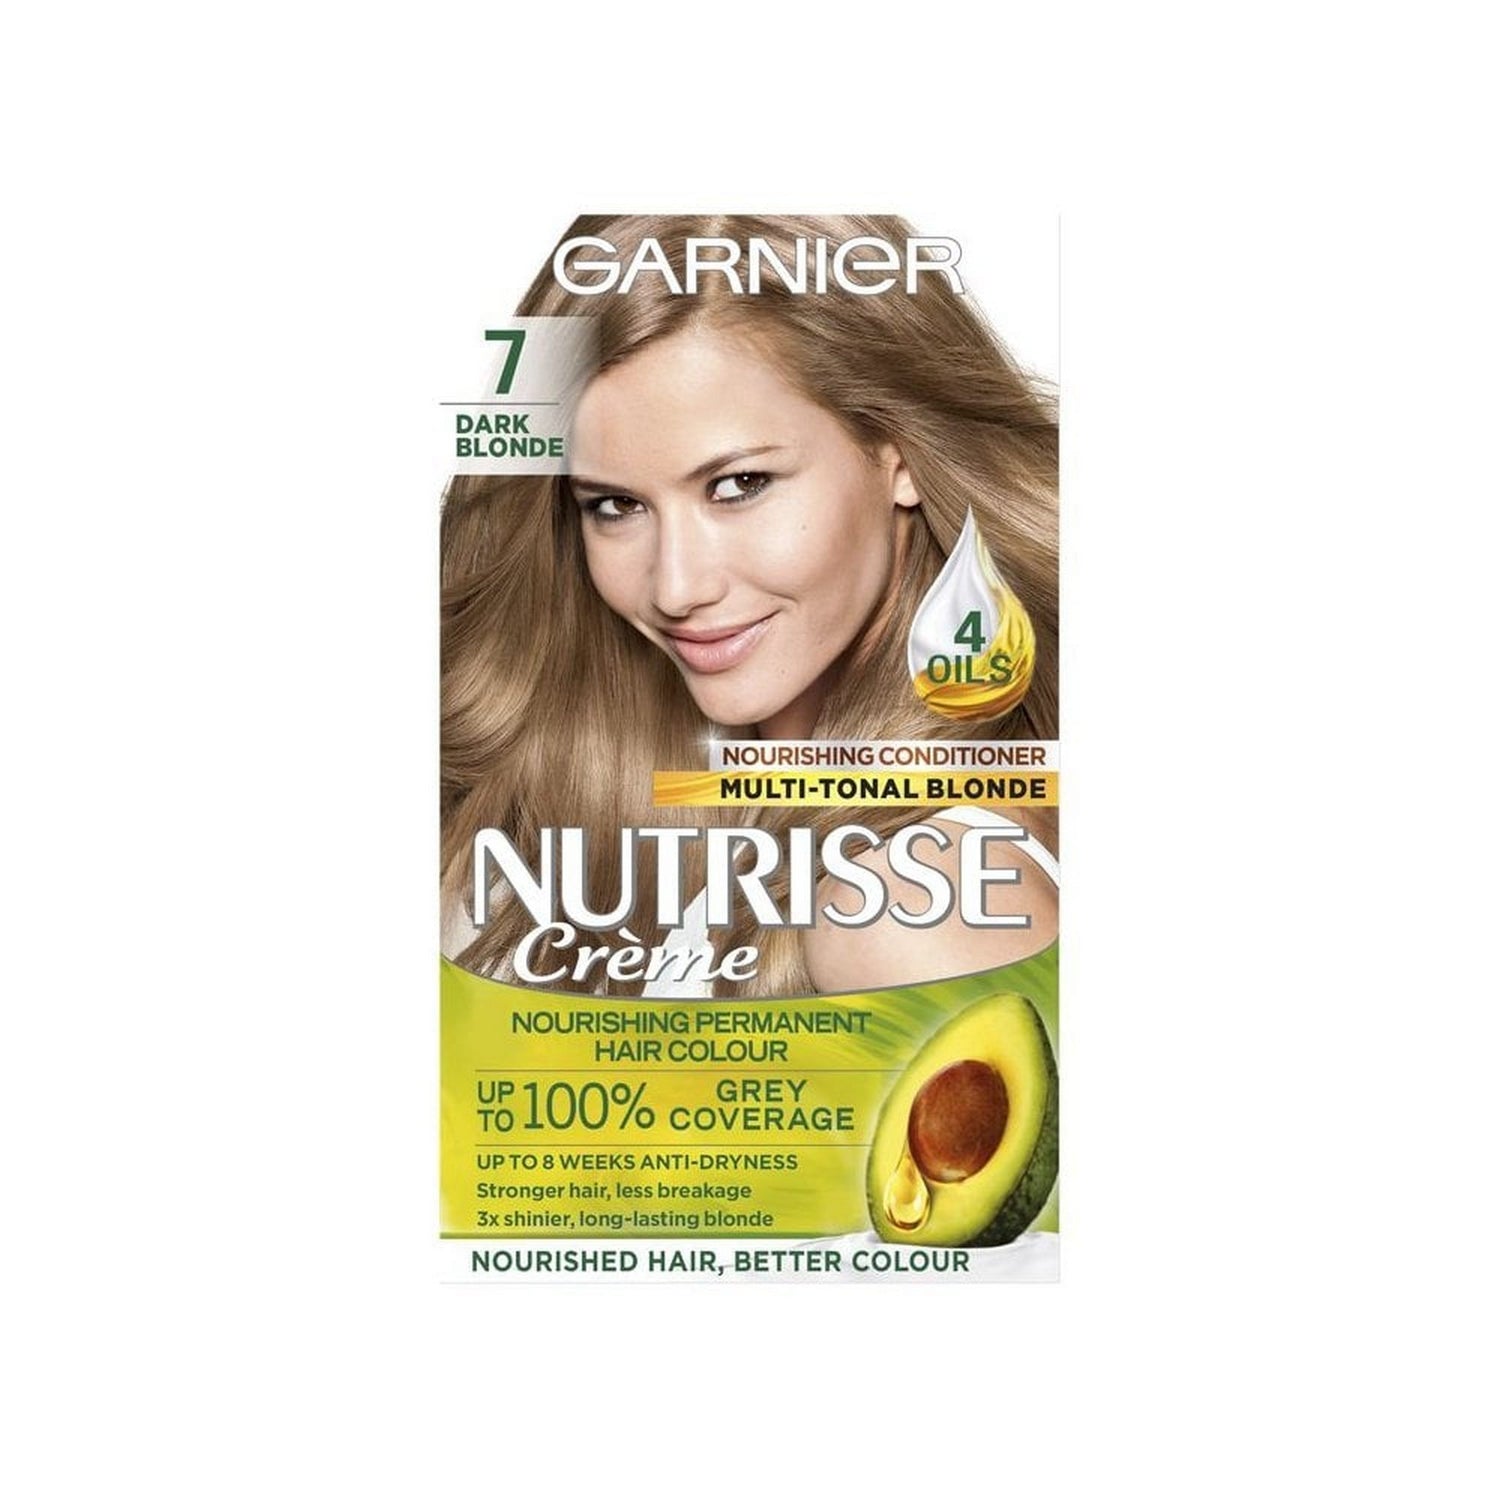 Garnier Nutrisse Ultra Crème Permanent Hair Dye Dark Blonde